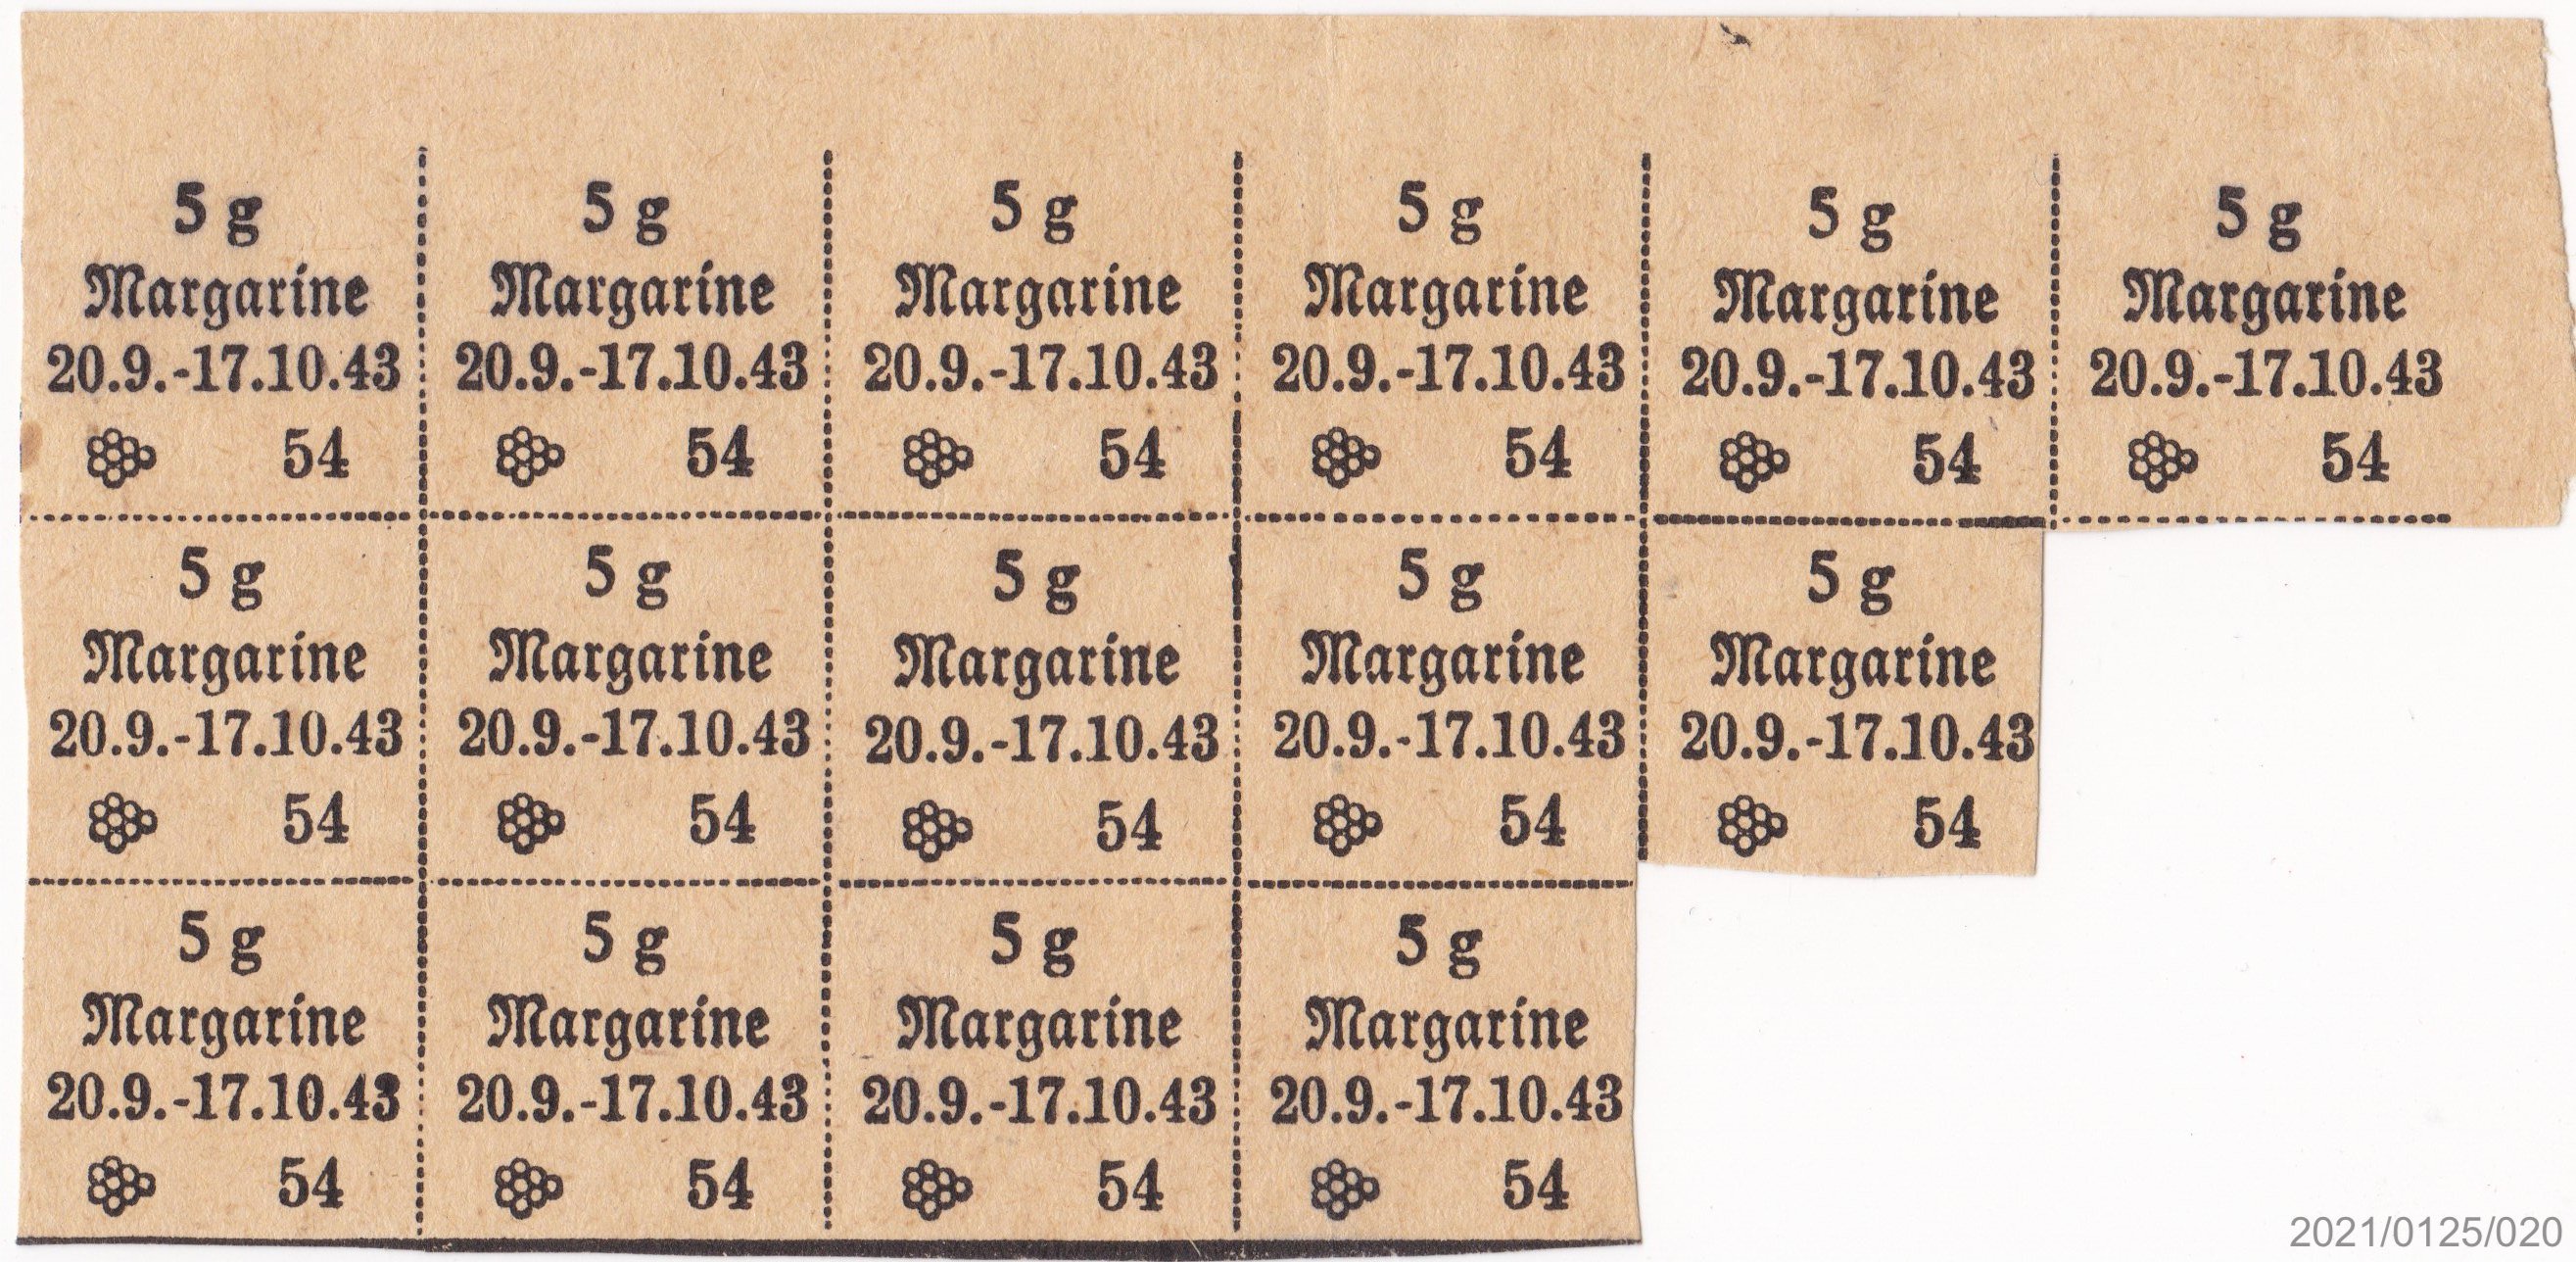 Lebensmittelmarken für je 5g Margarine 20.9. - 17.10.1943 (Museumsgesellschaft Bad Dürkheim e. V. CC BY-NC-SA)